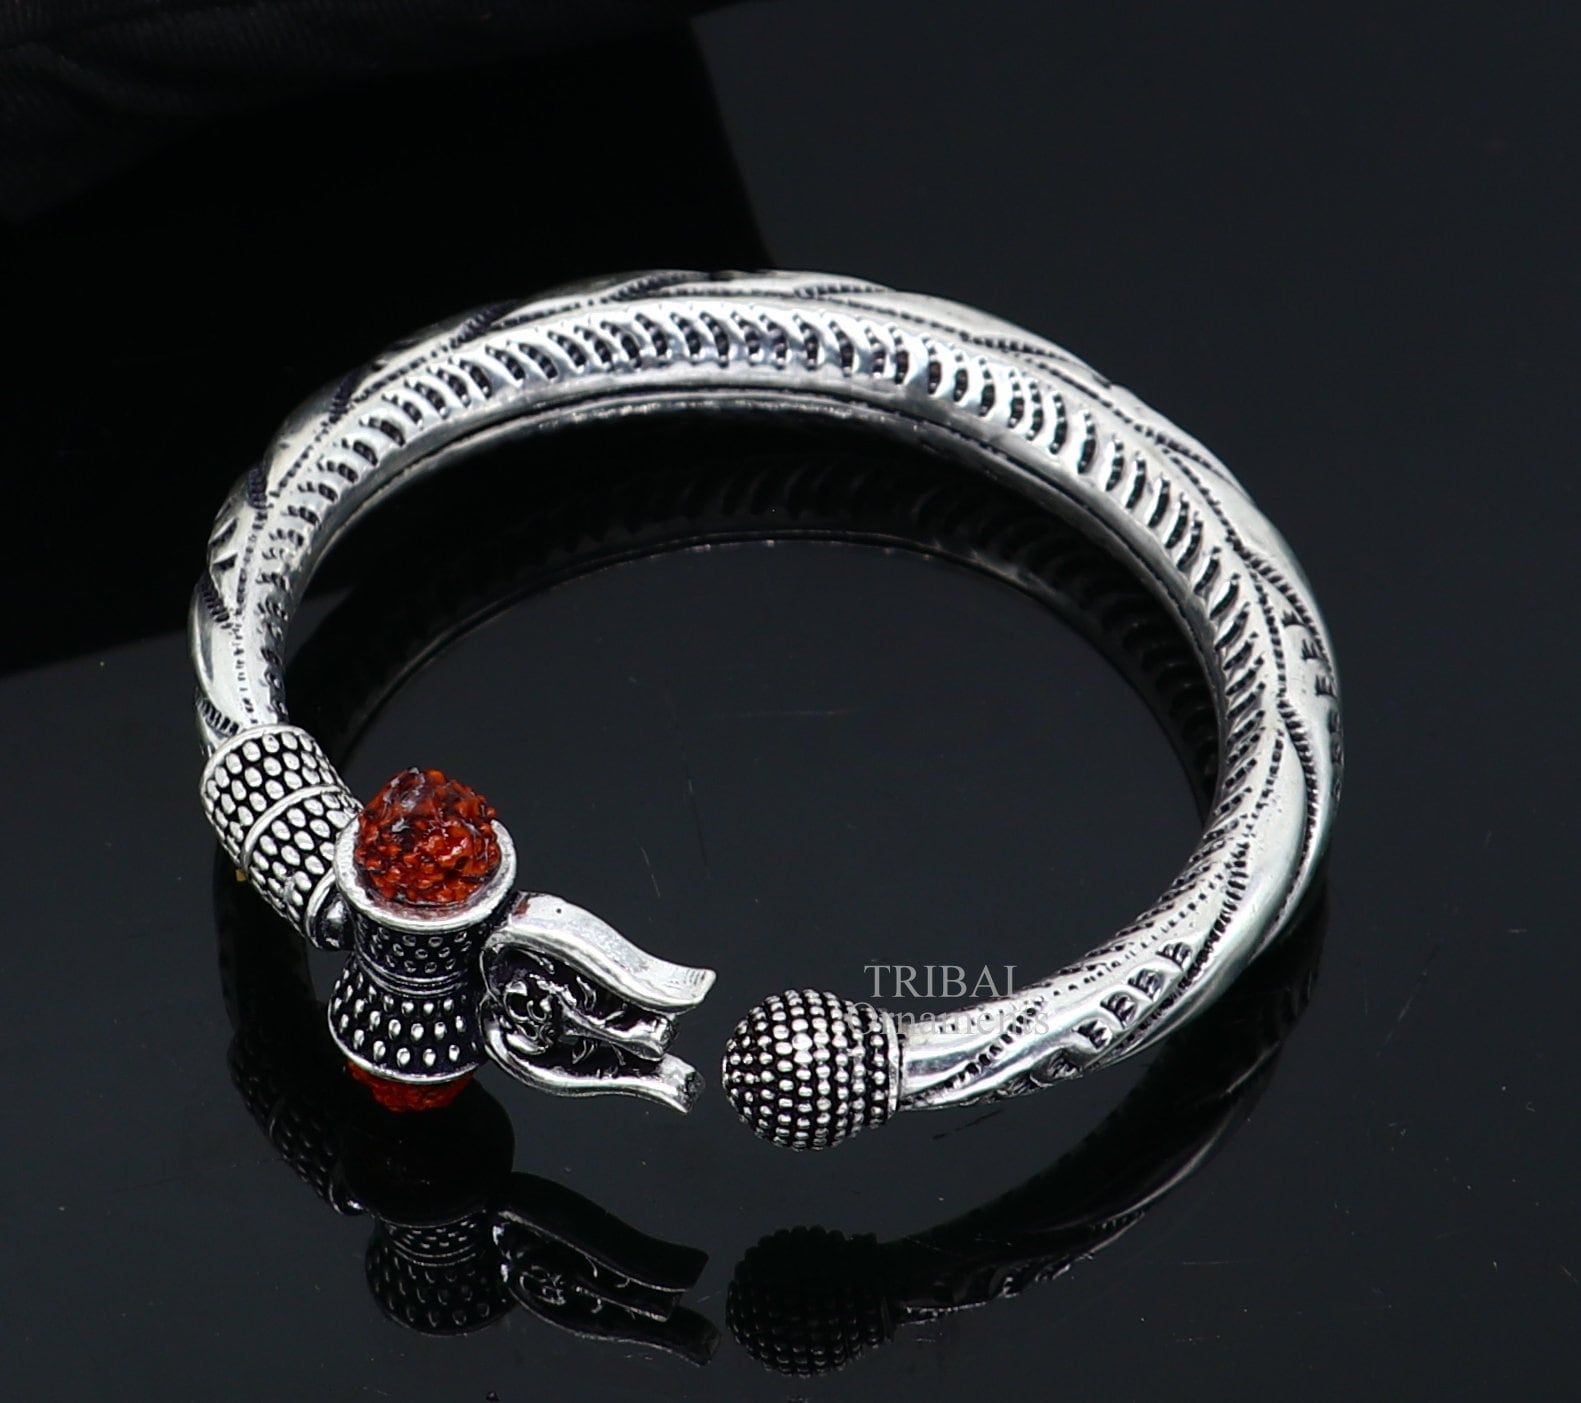 925 sterling silver handmade lord shiva Babubali kada bangle bracelet, best Shiva trident Trishul kada, men's gifting jewelry RNSK474 - TRIBAL ORNAMENTS